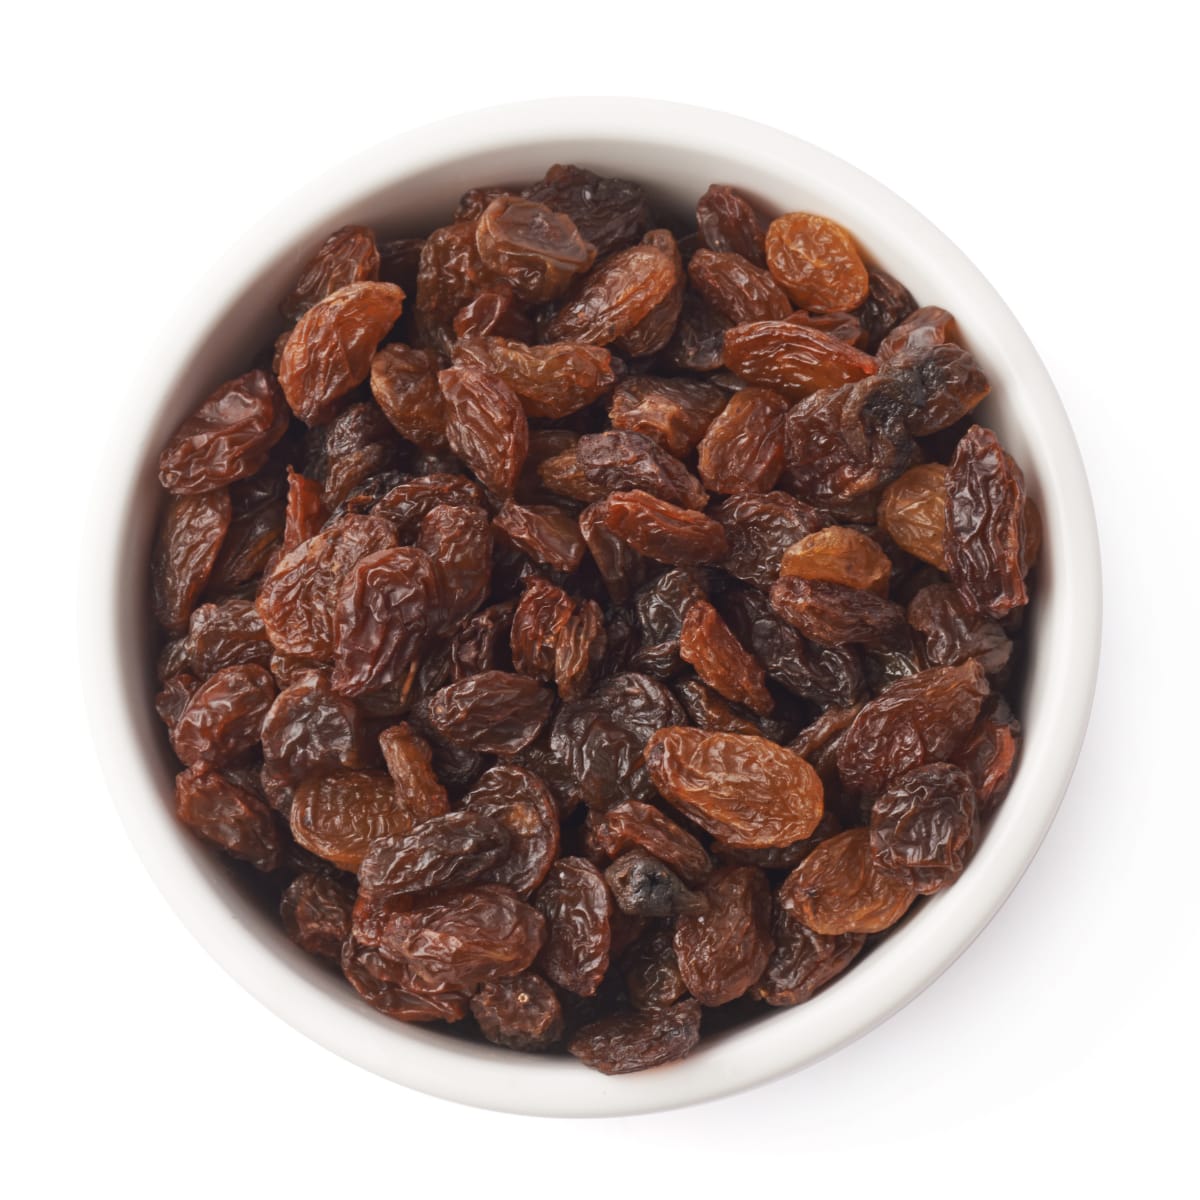 Seedless Raisins - Large Flavorful Raisins